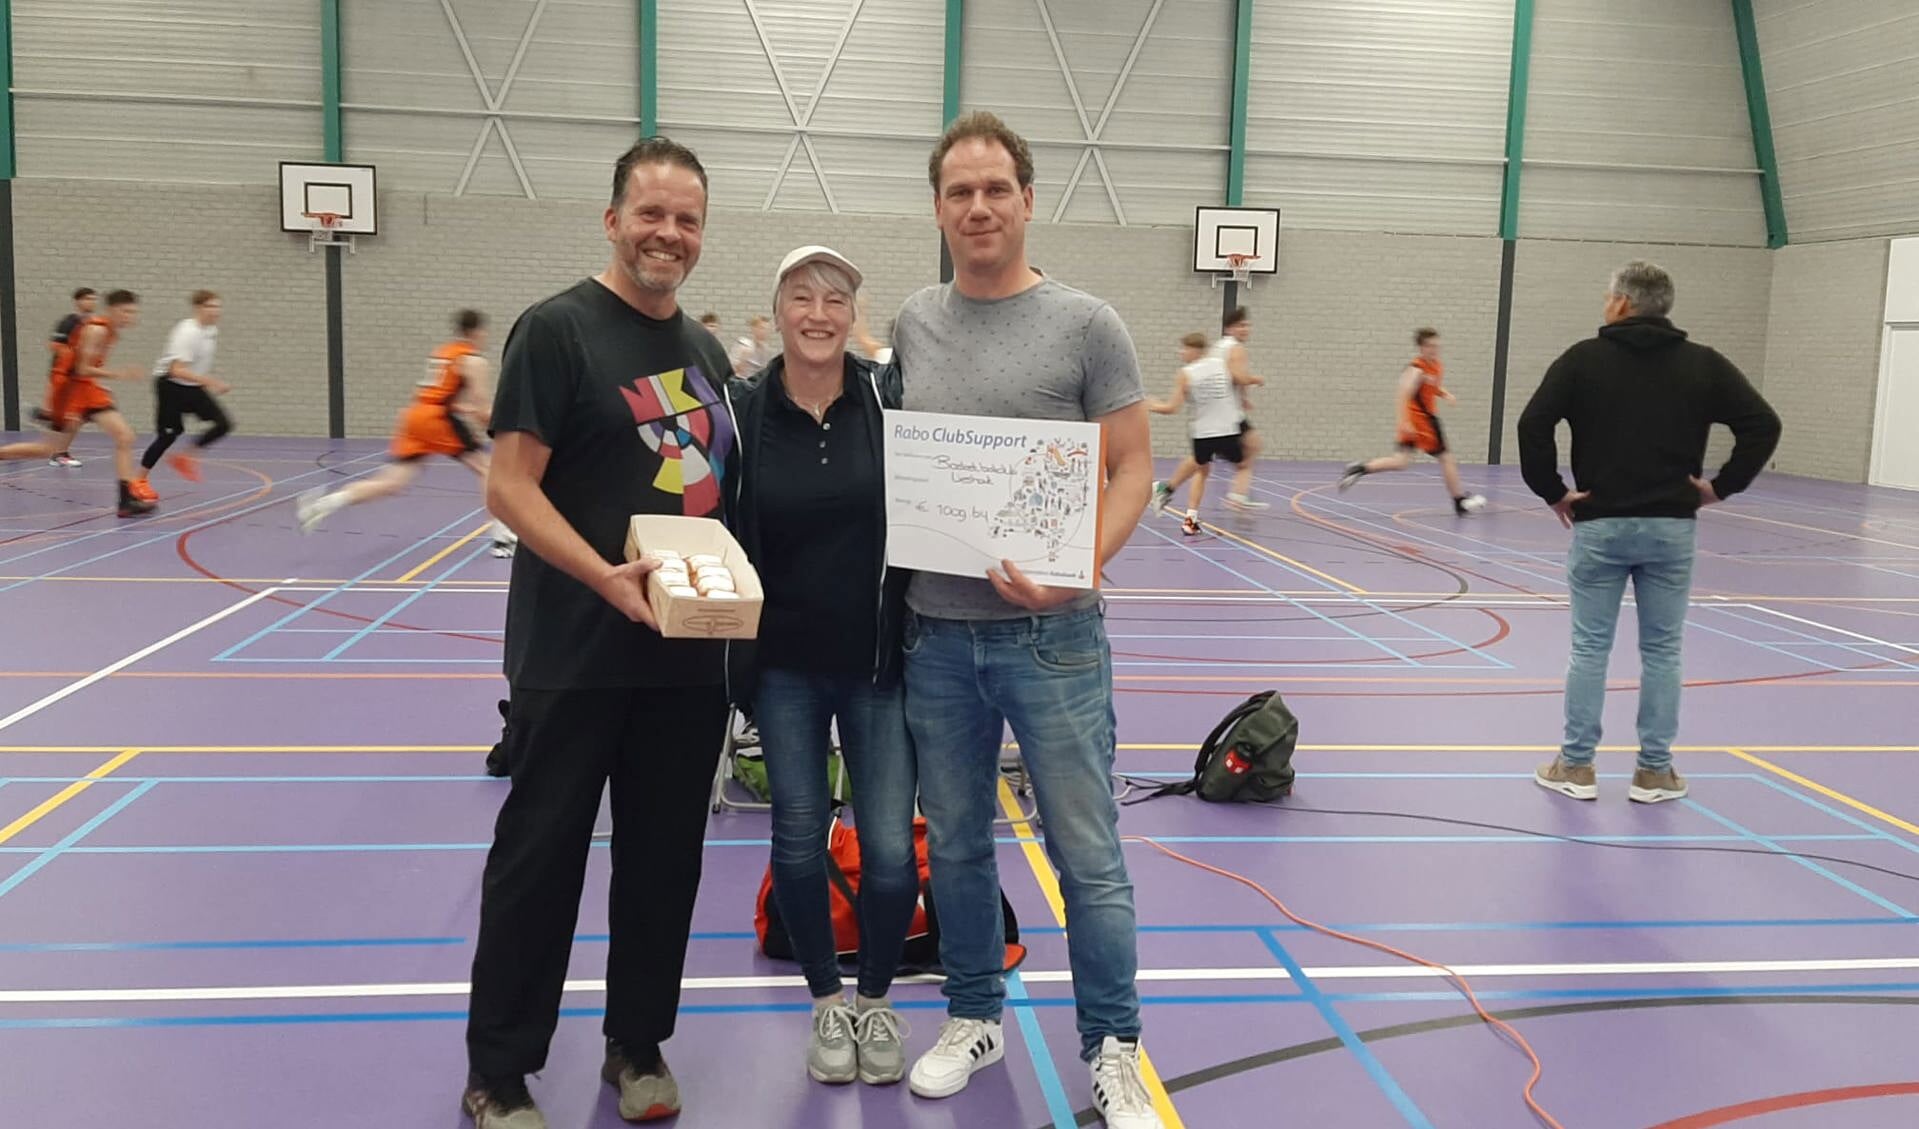 Basketball Club Lieshout blij met de steun vanuit Rabo ClubSupport